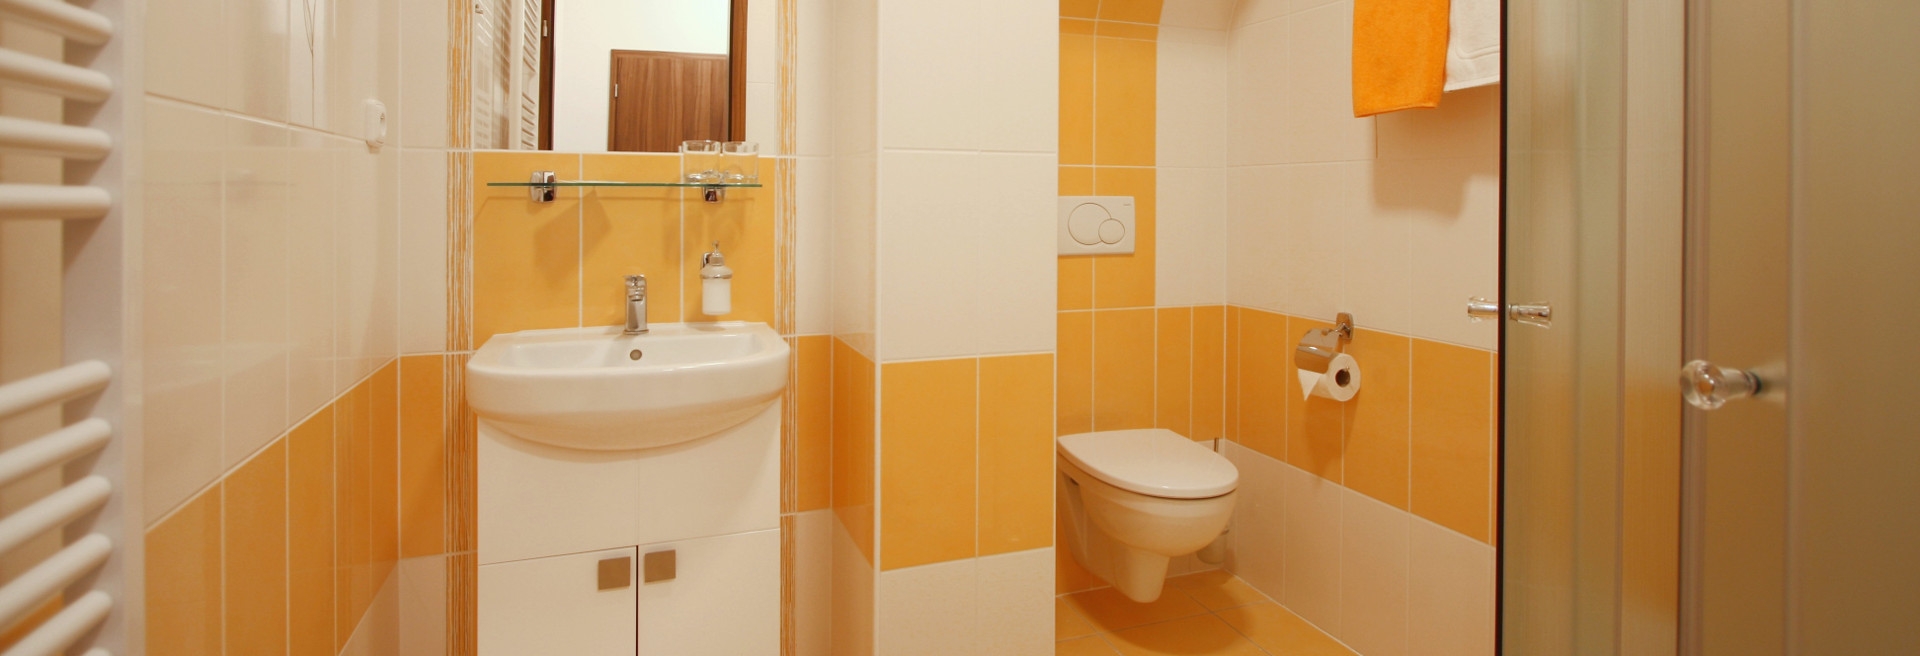 Bathroom in spa villa GAZÁRKA - THERMAL SPA Velké Losiny